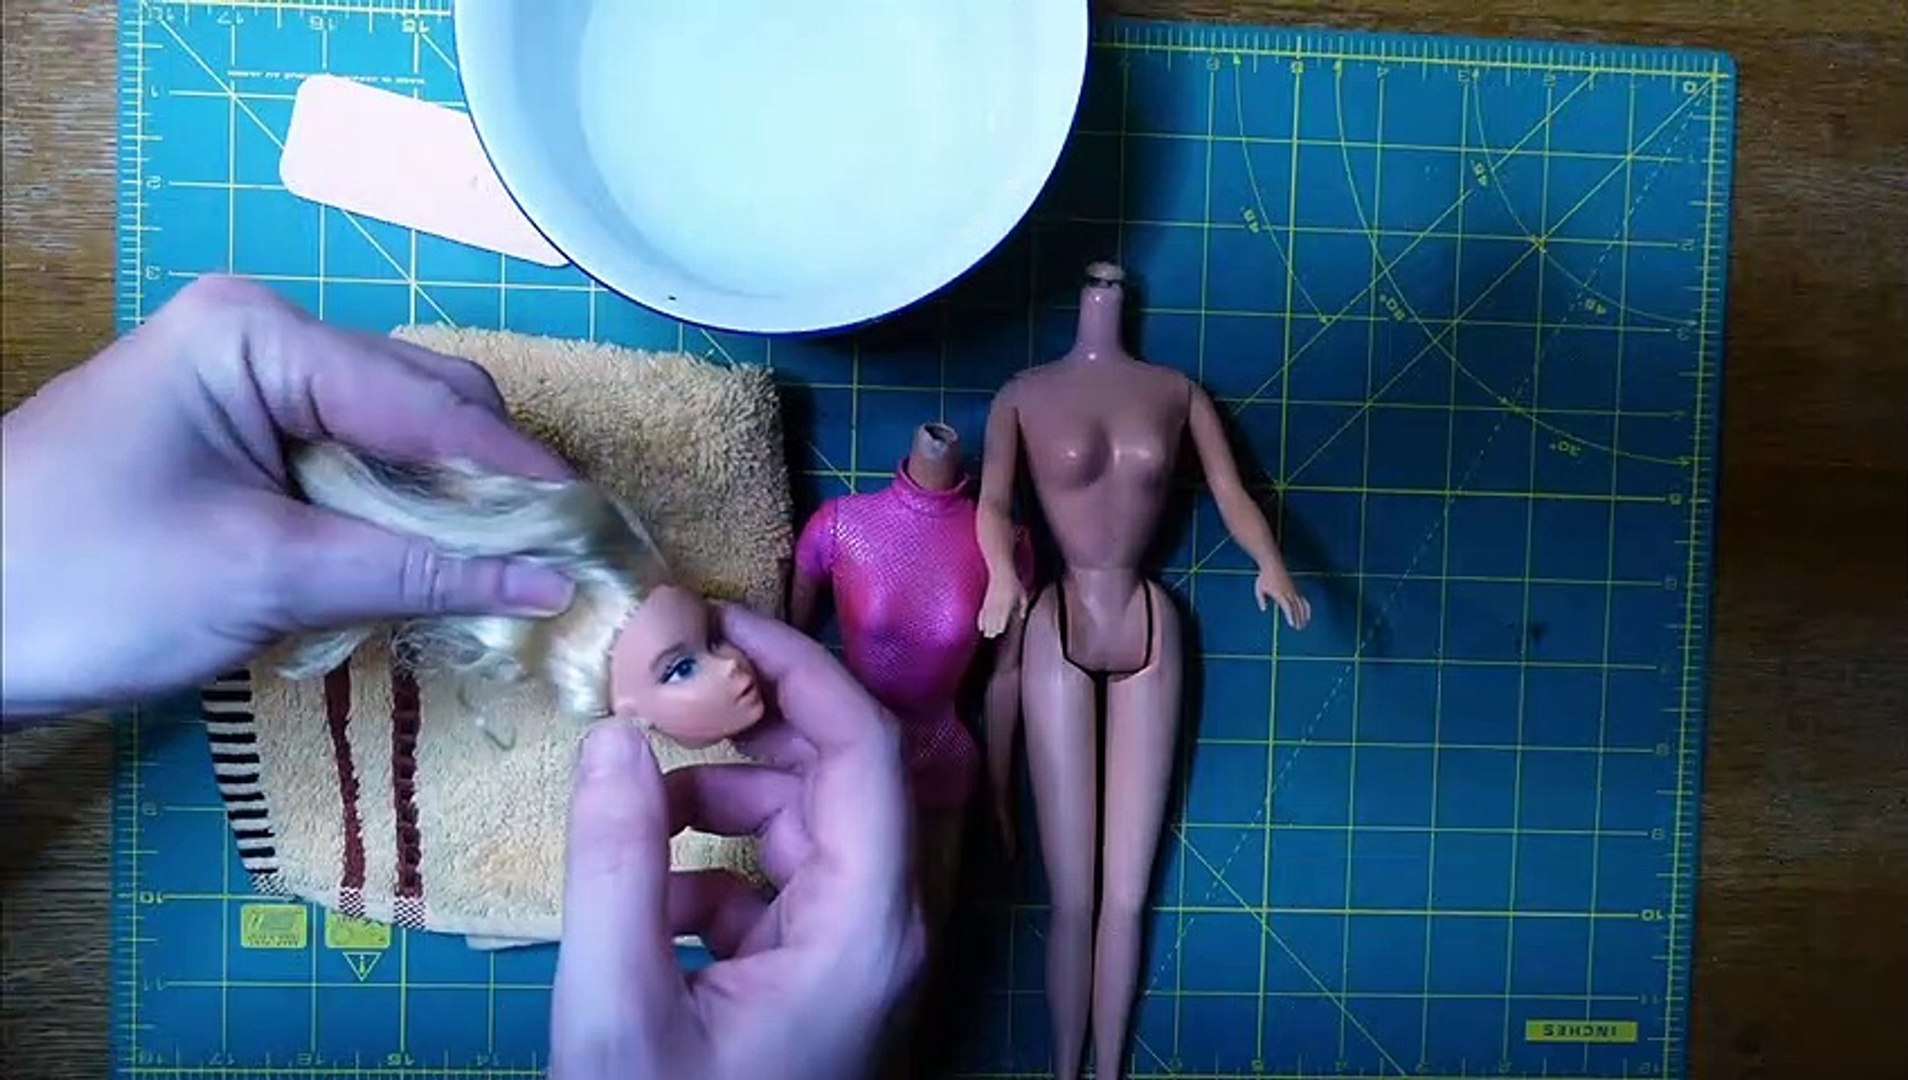 The barbie repair cafe: broken barbie neck - How to fix broken doll neck -  video Dailymotion